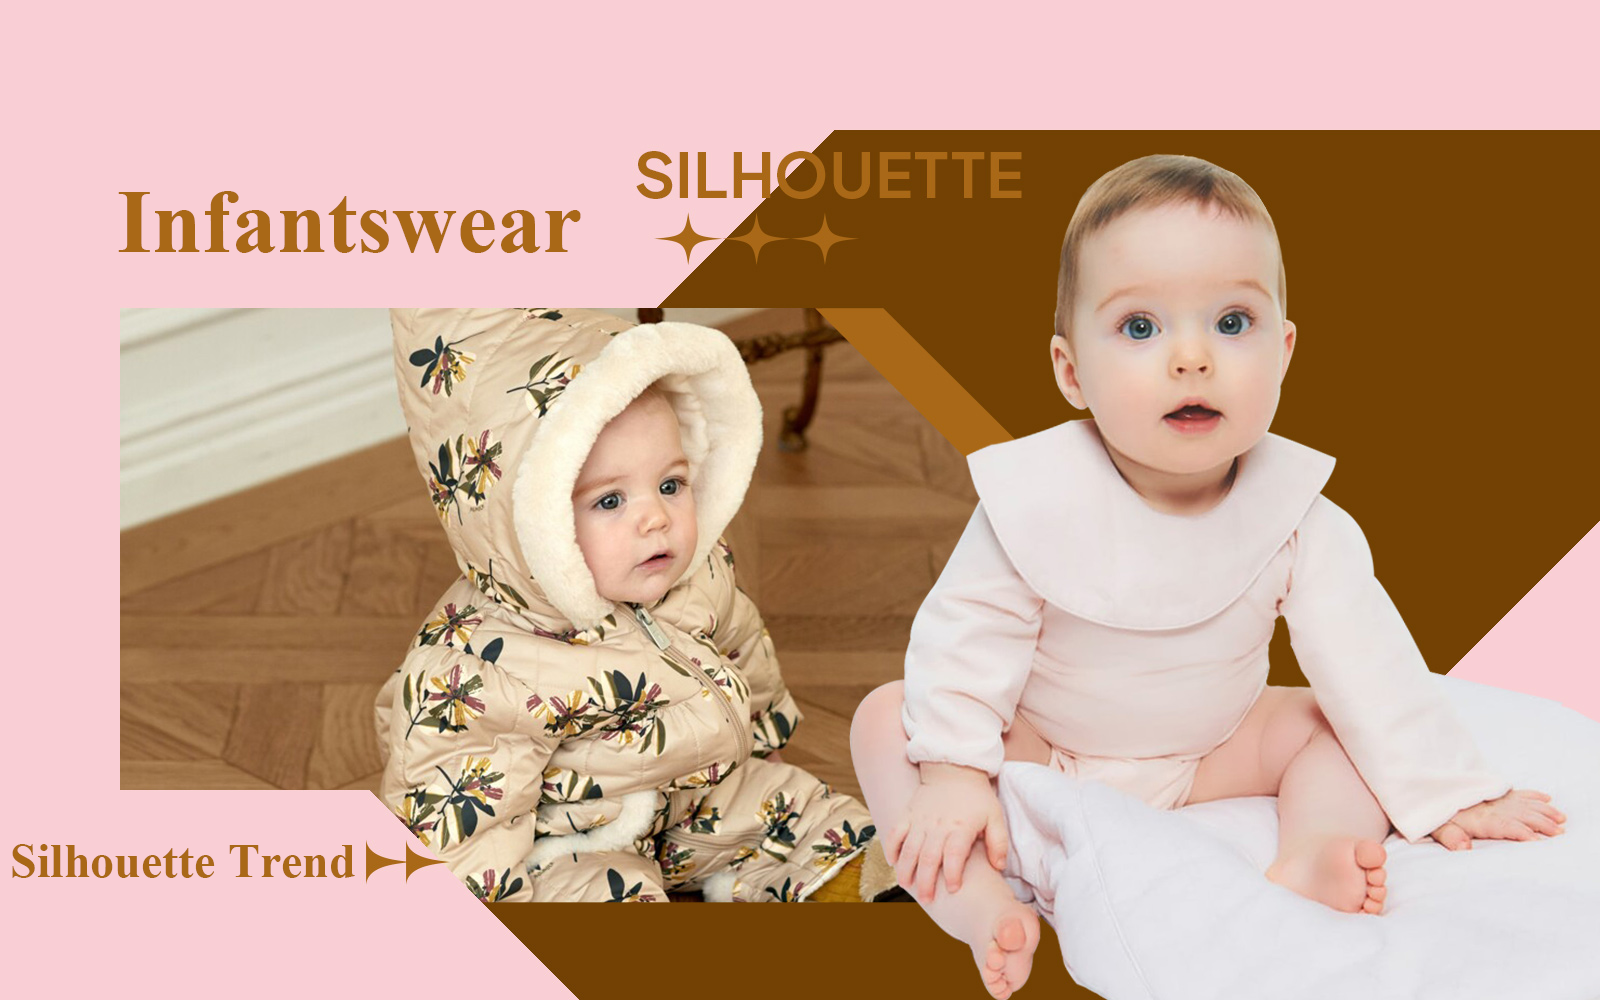 The Silhouette Trend for Infantswear